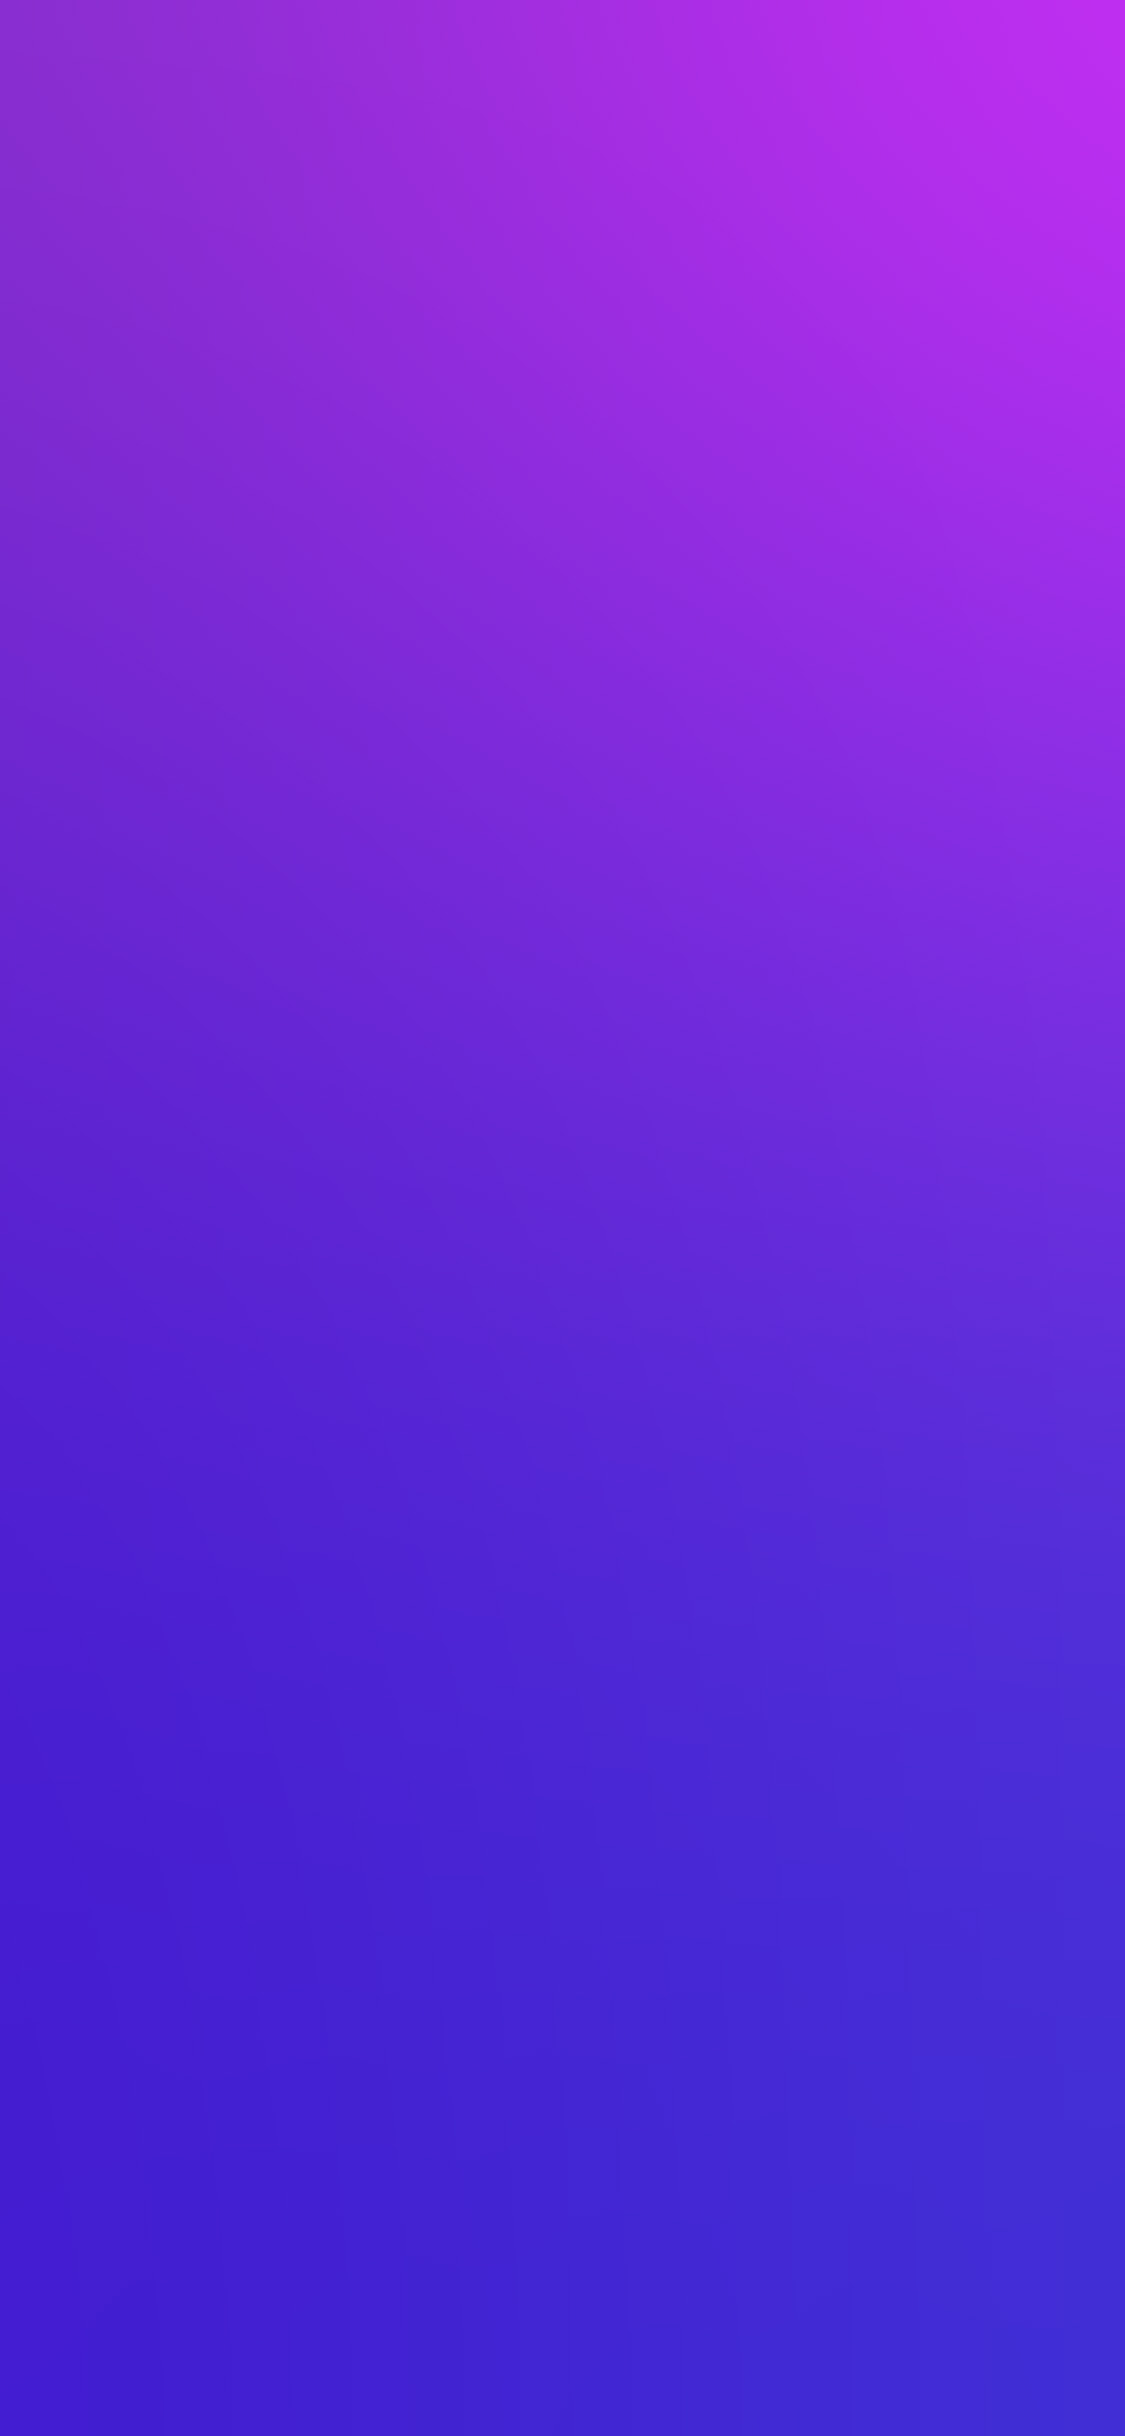 wallpaper. purple blue blur gradation